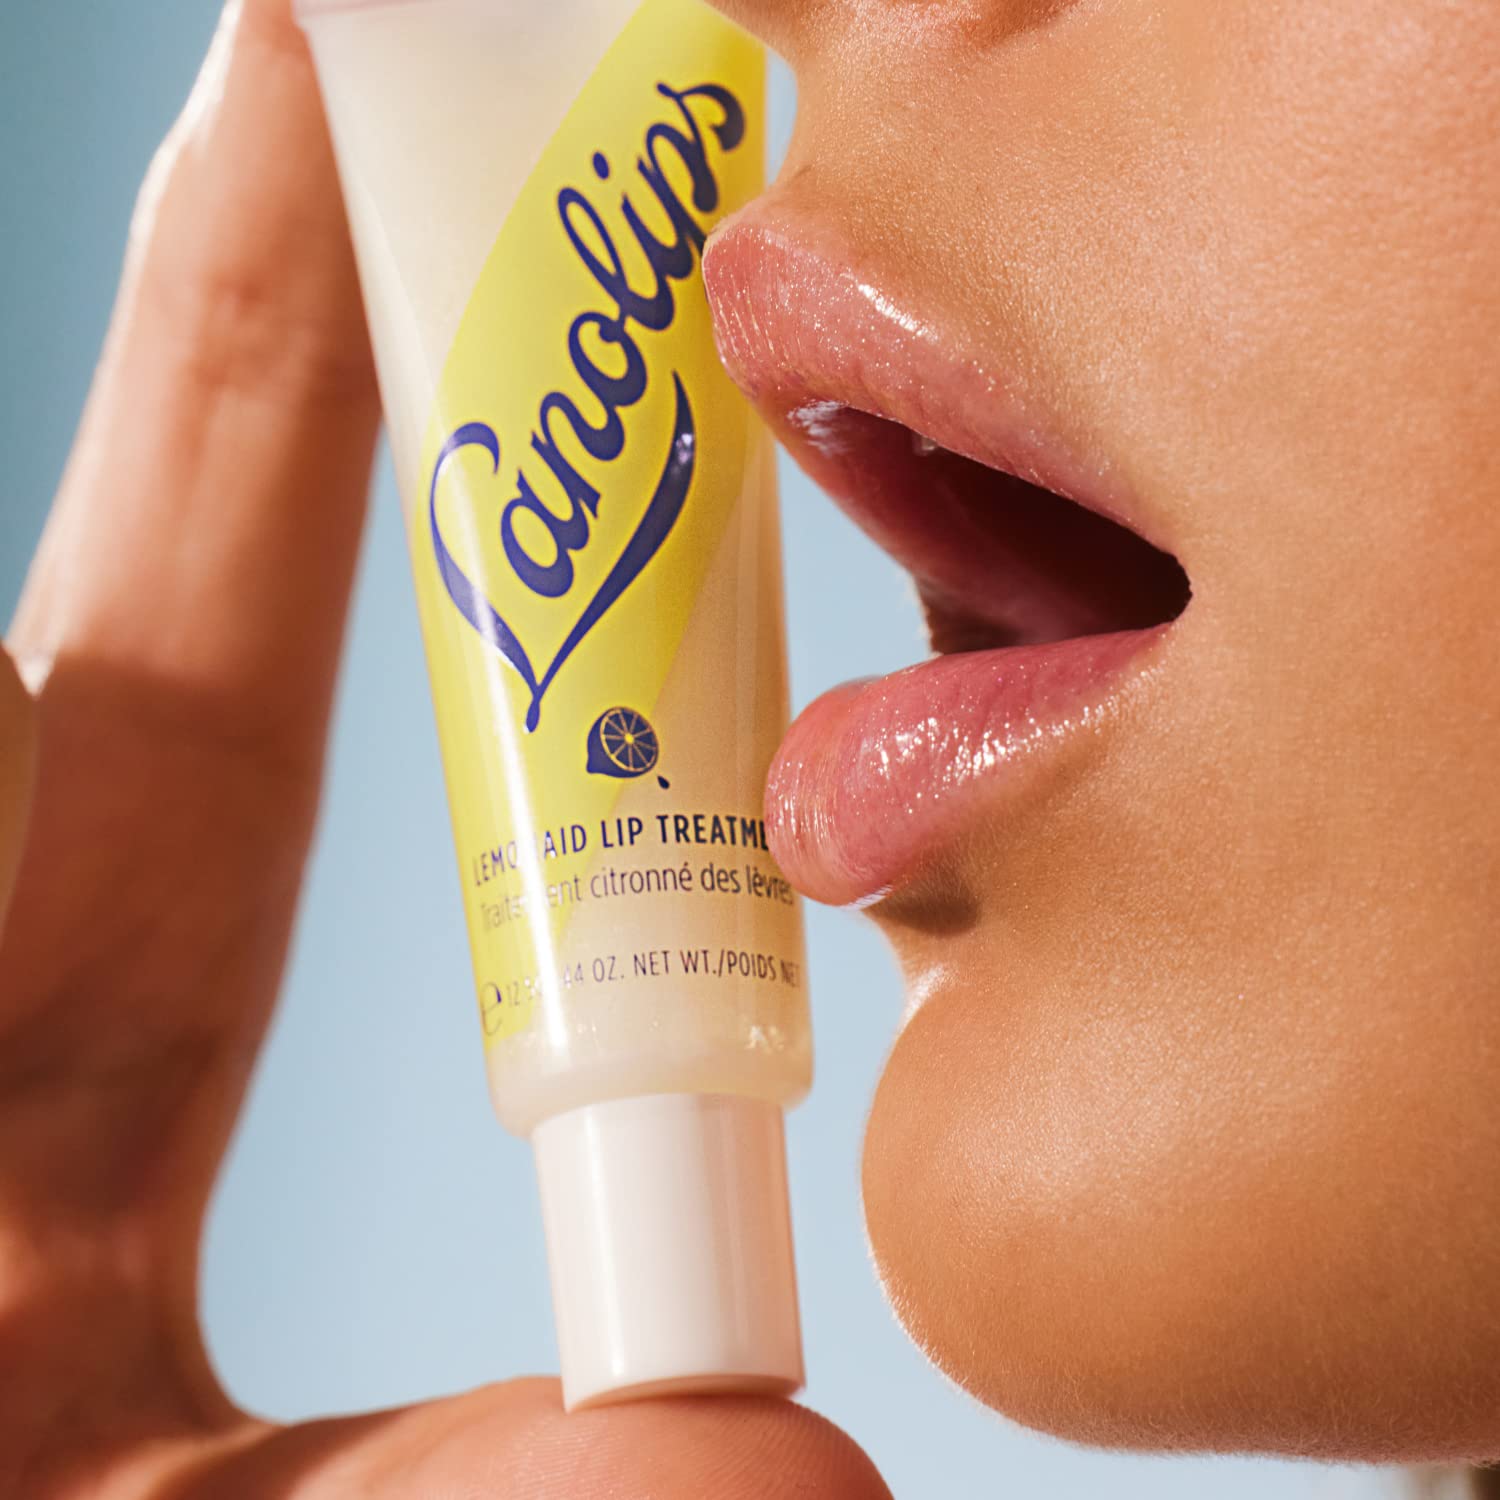 Lanolips Lemonaid Lip Treatment - Clear Lip Gloss and Exfoliant with Lanolin, Lemon Oil, Vitamin E Oil and Shimmer - Tinted Lip Balm for Dry, Cracked, Peeling Lips (12.5g / 0.42oz)